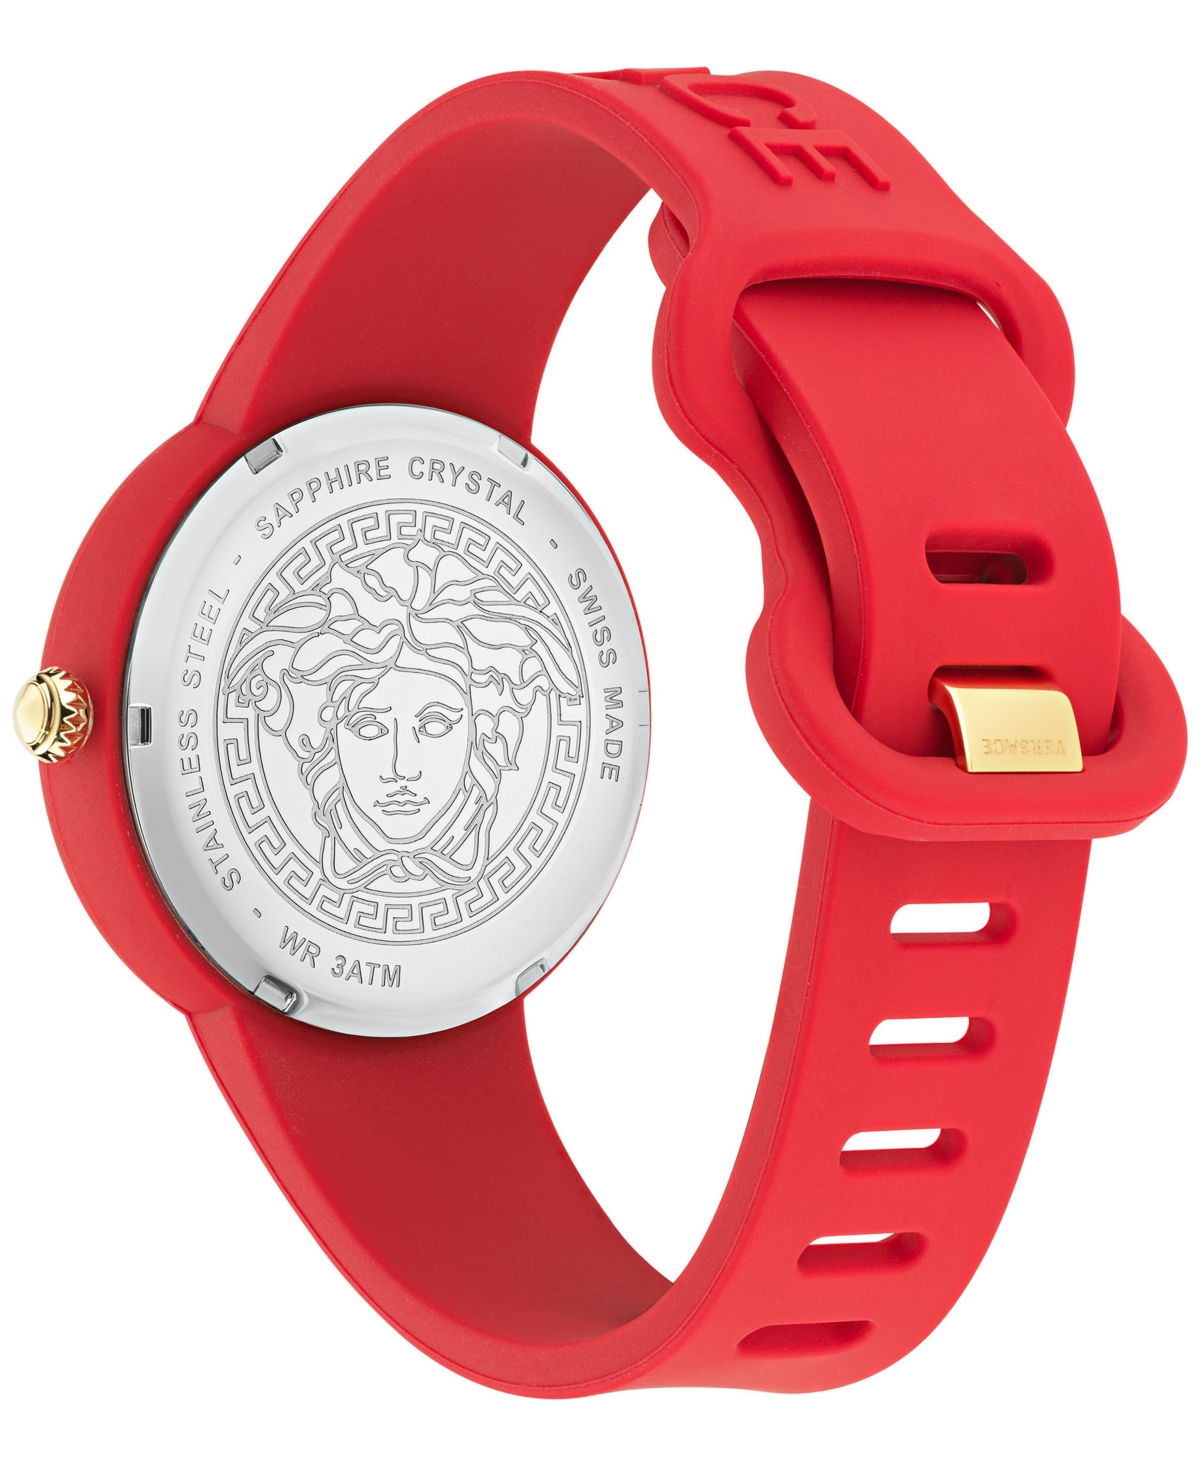 Shop Versace Women's Swiss Medusa Pop Red Silicone Strap Watch 39mm Set